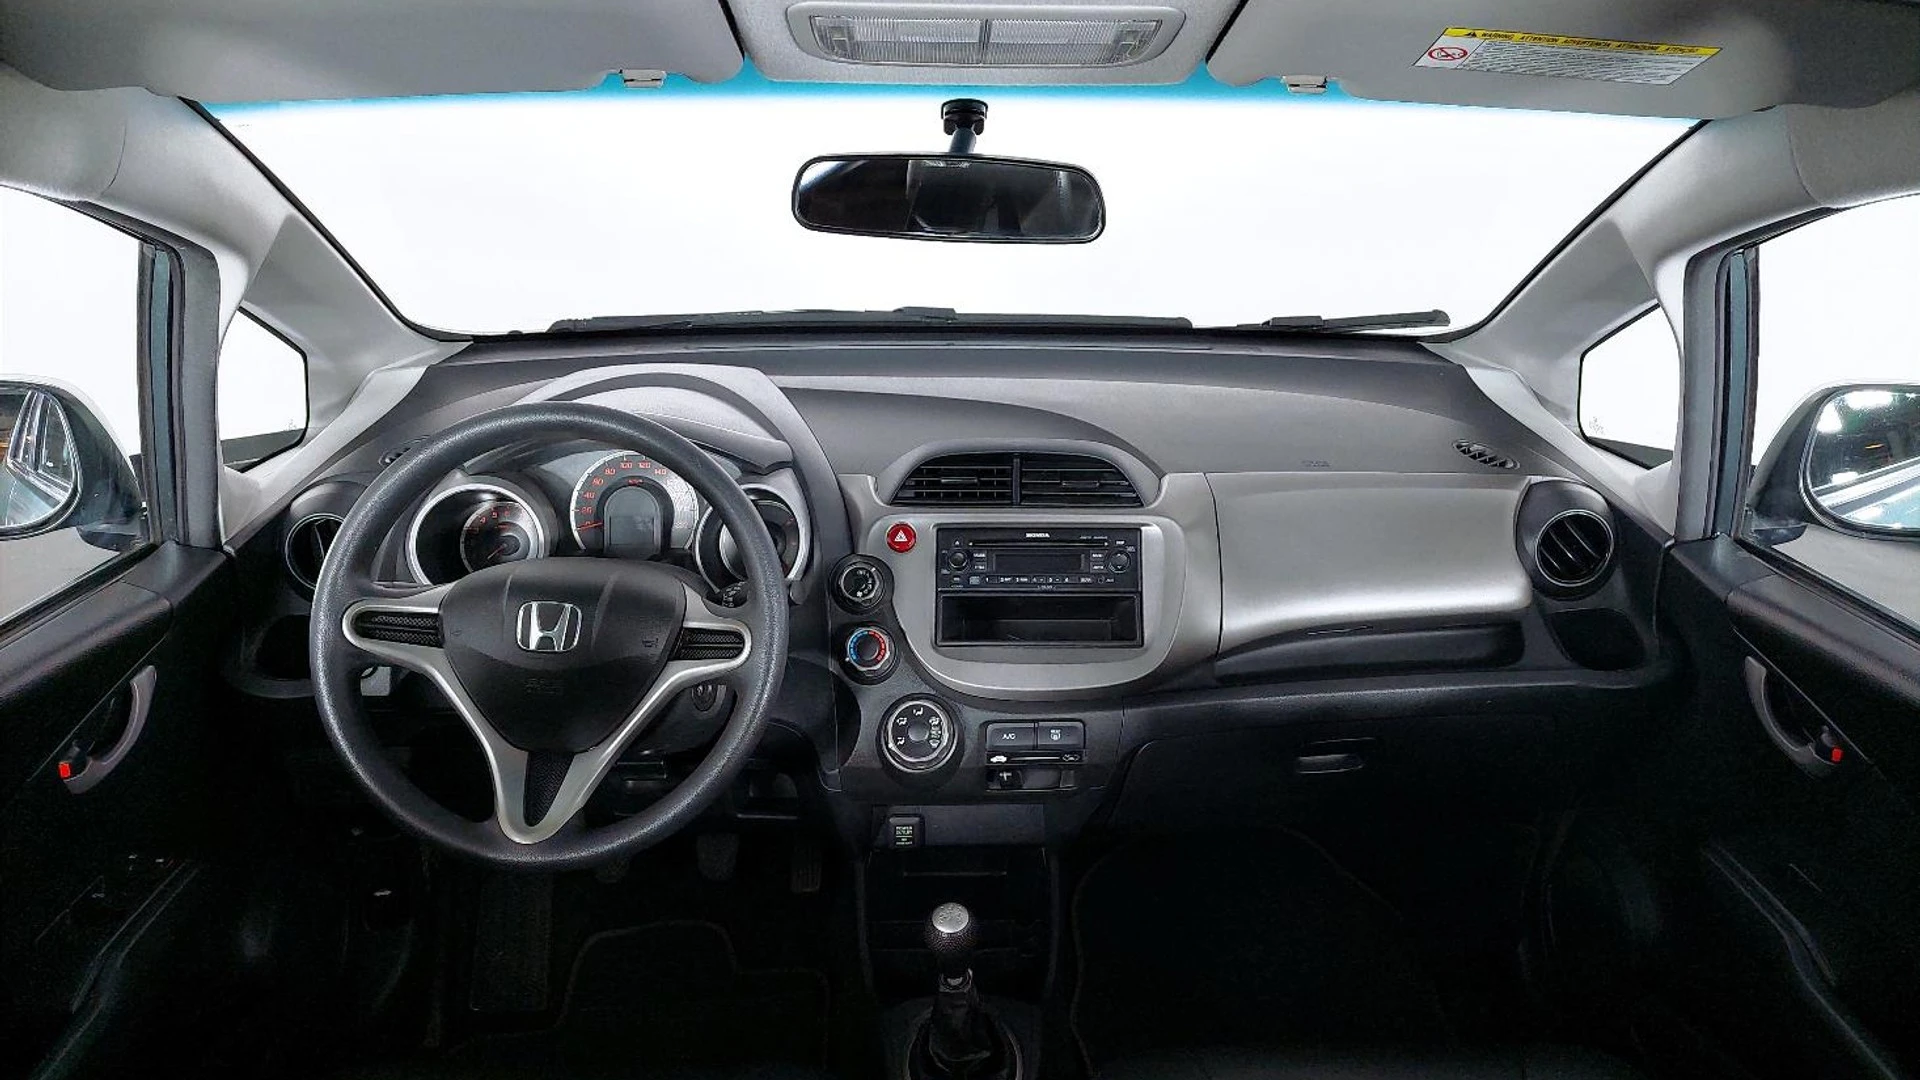 Honda Fit 2012 interior